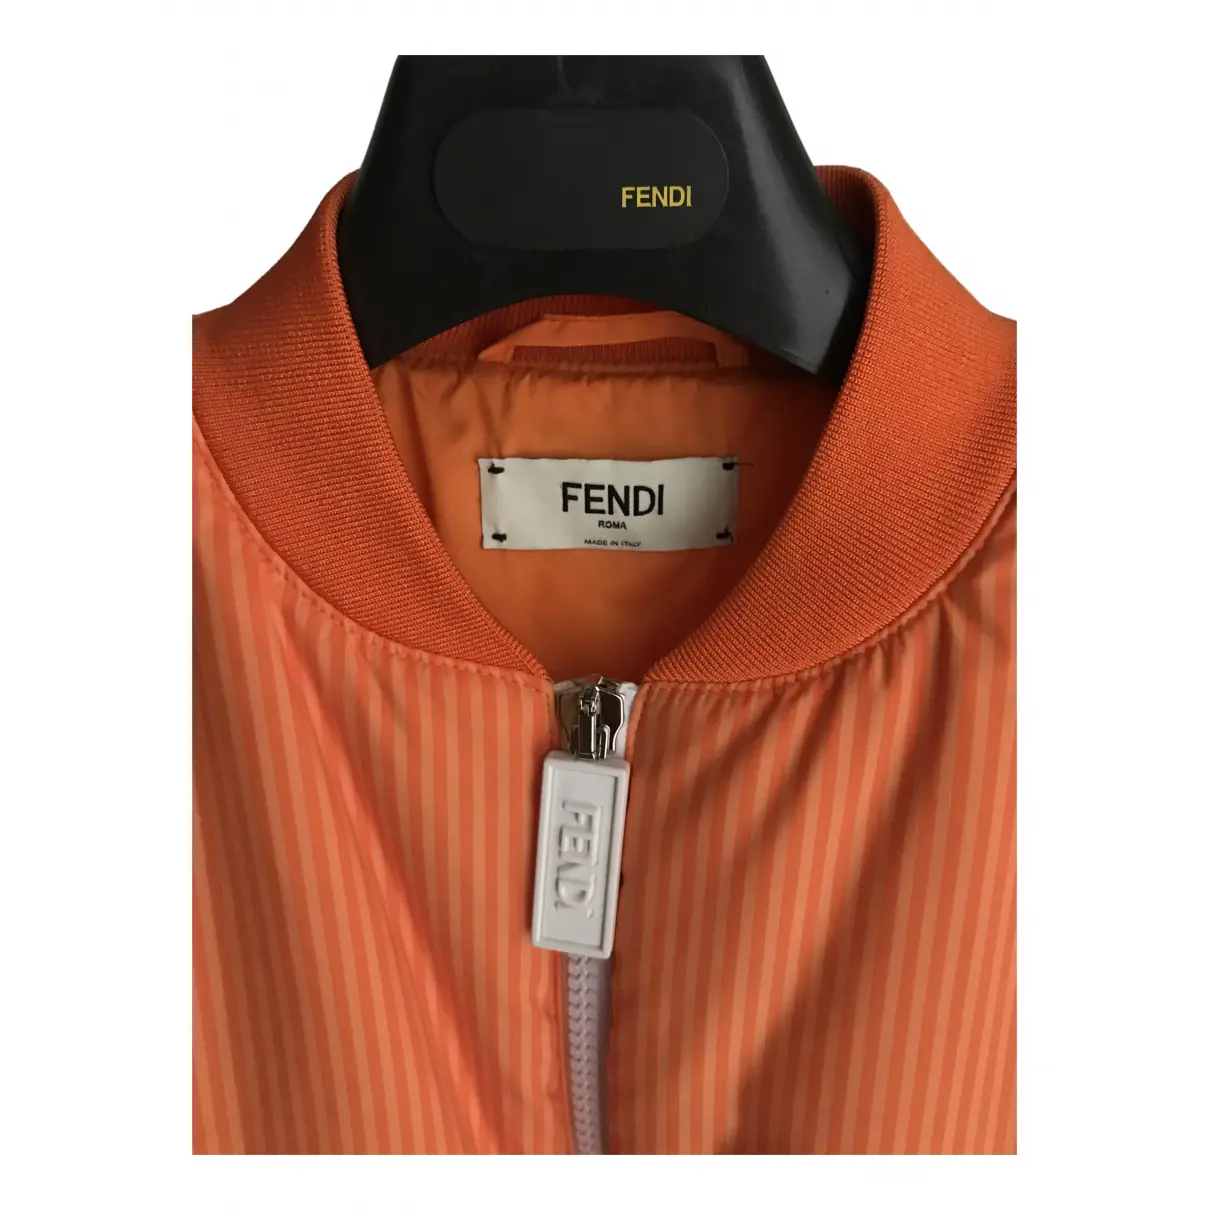 Buy Fendi Jacket online